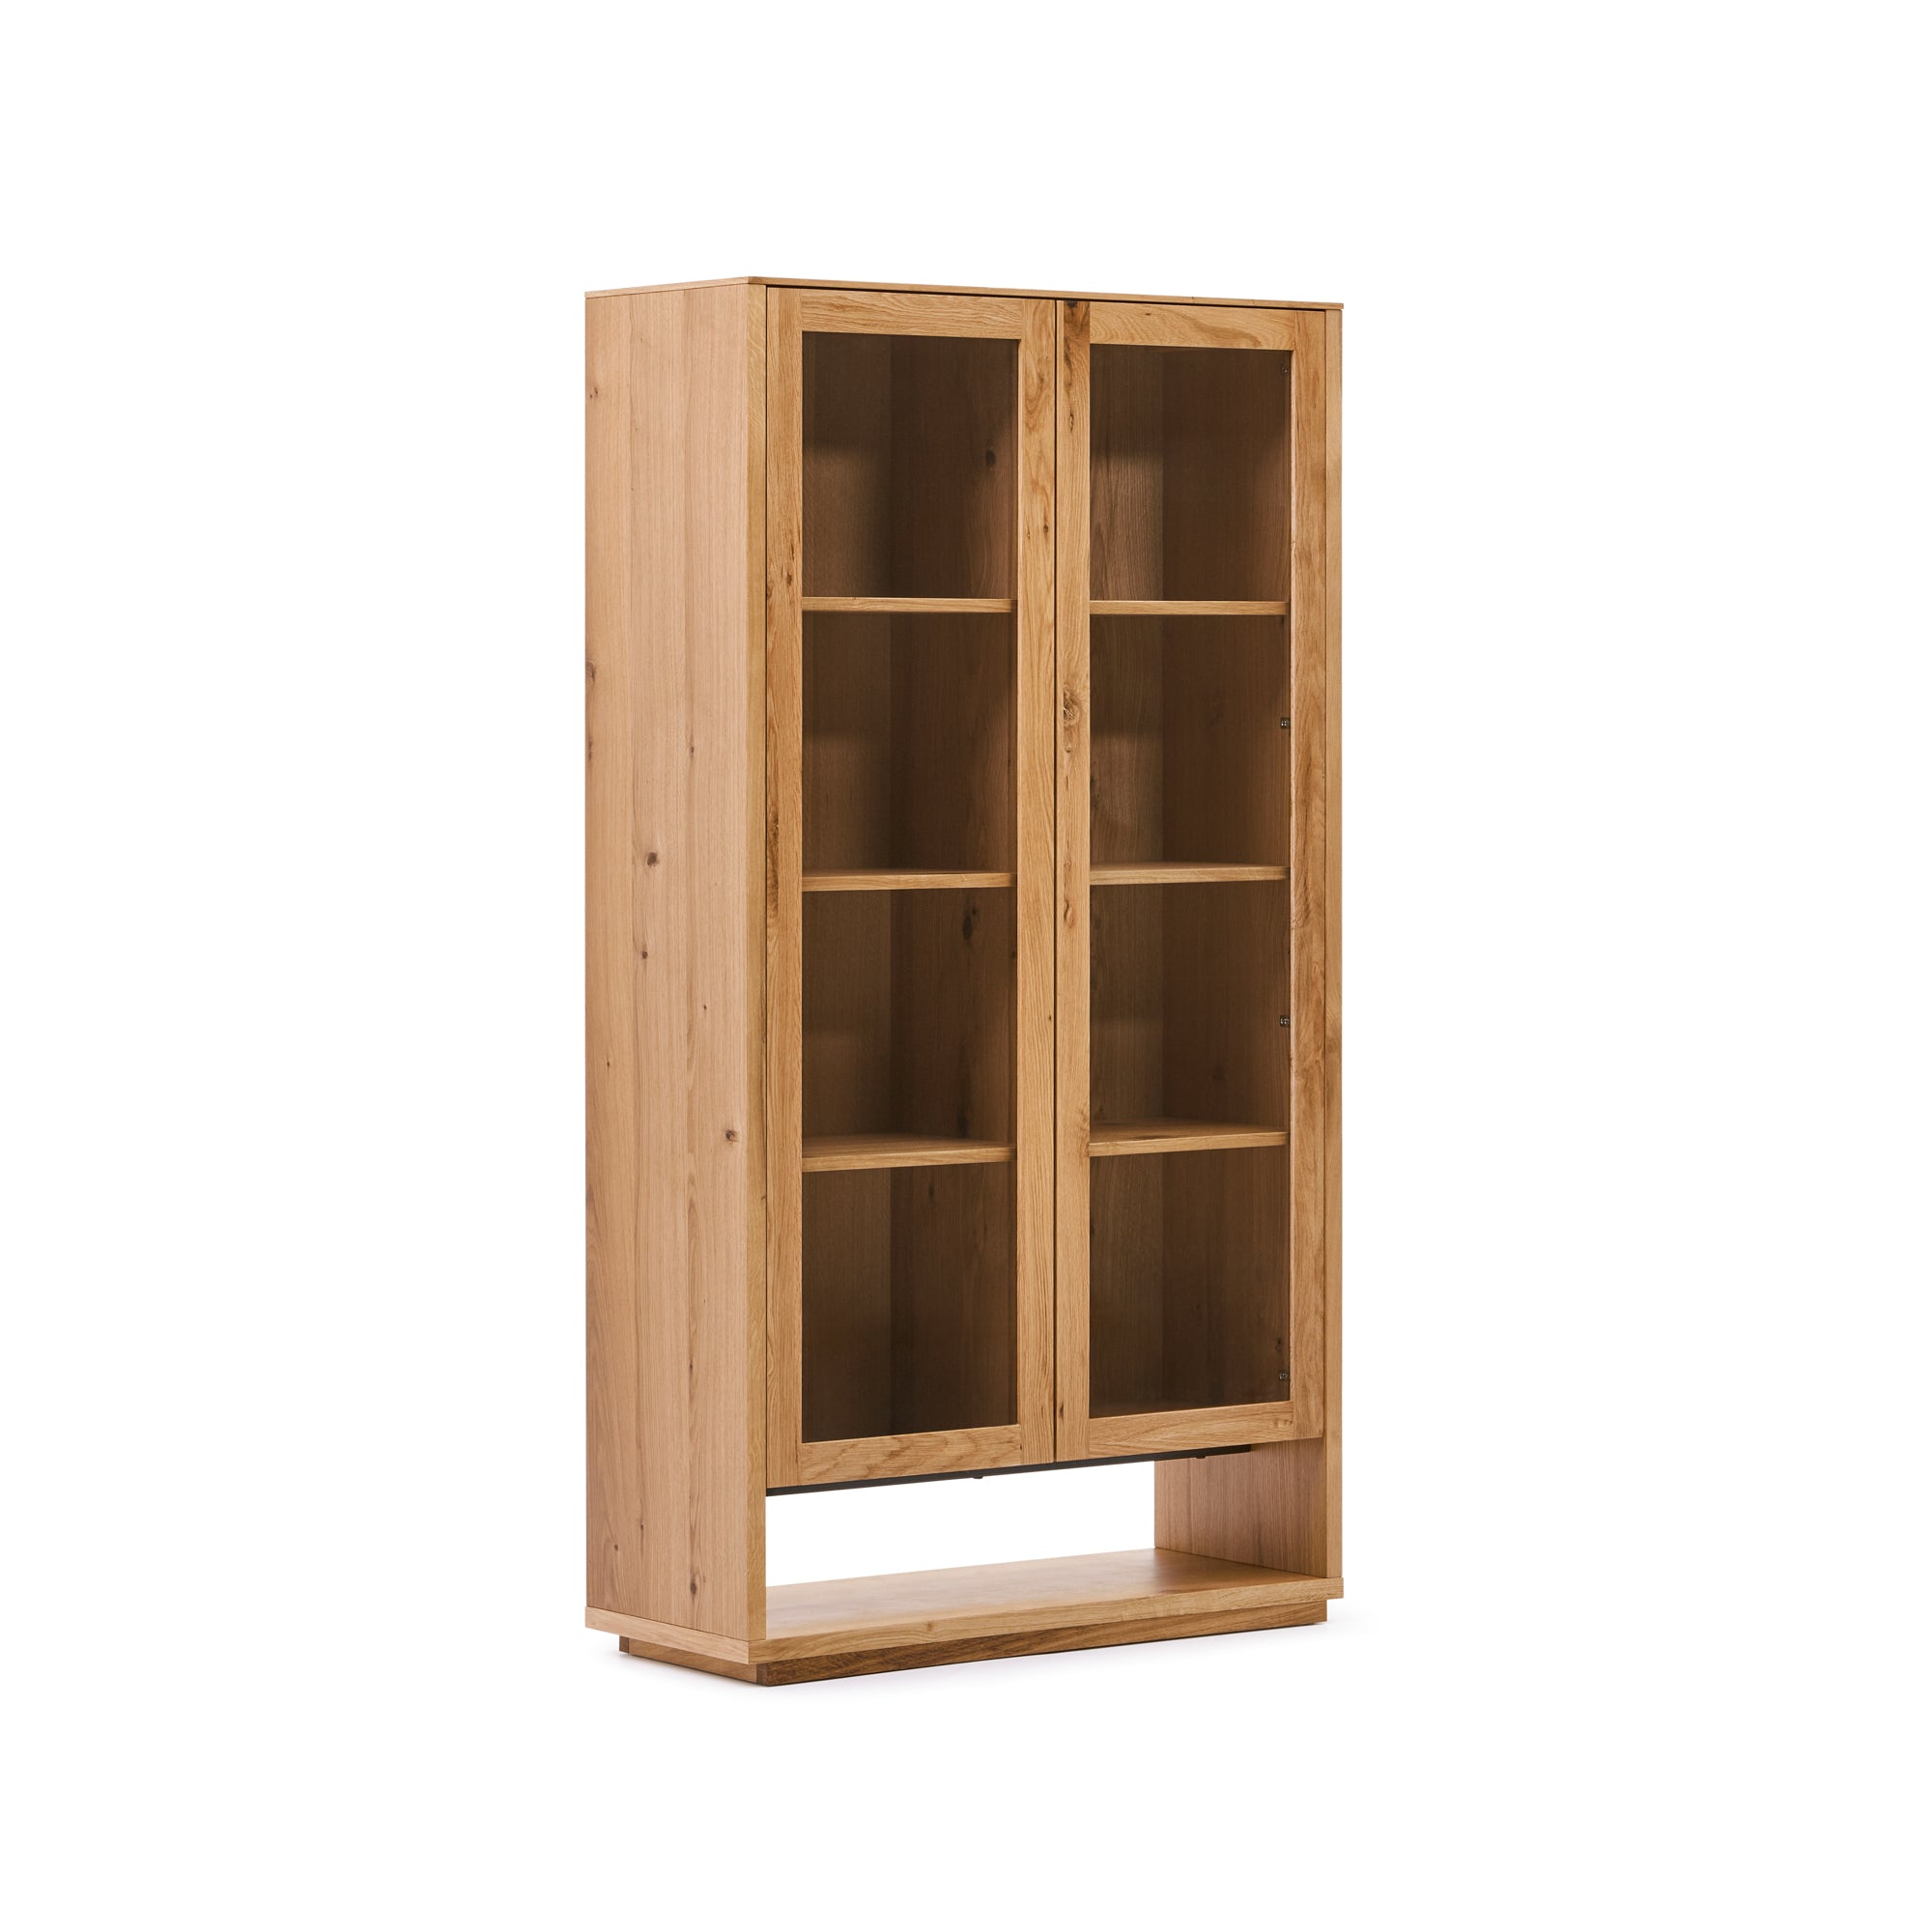 Alguema display cabinet in oak wood veneer with natural finish, 100 x 185 cm